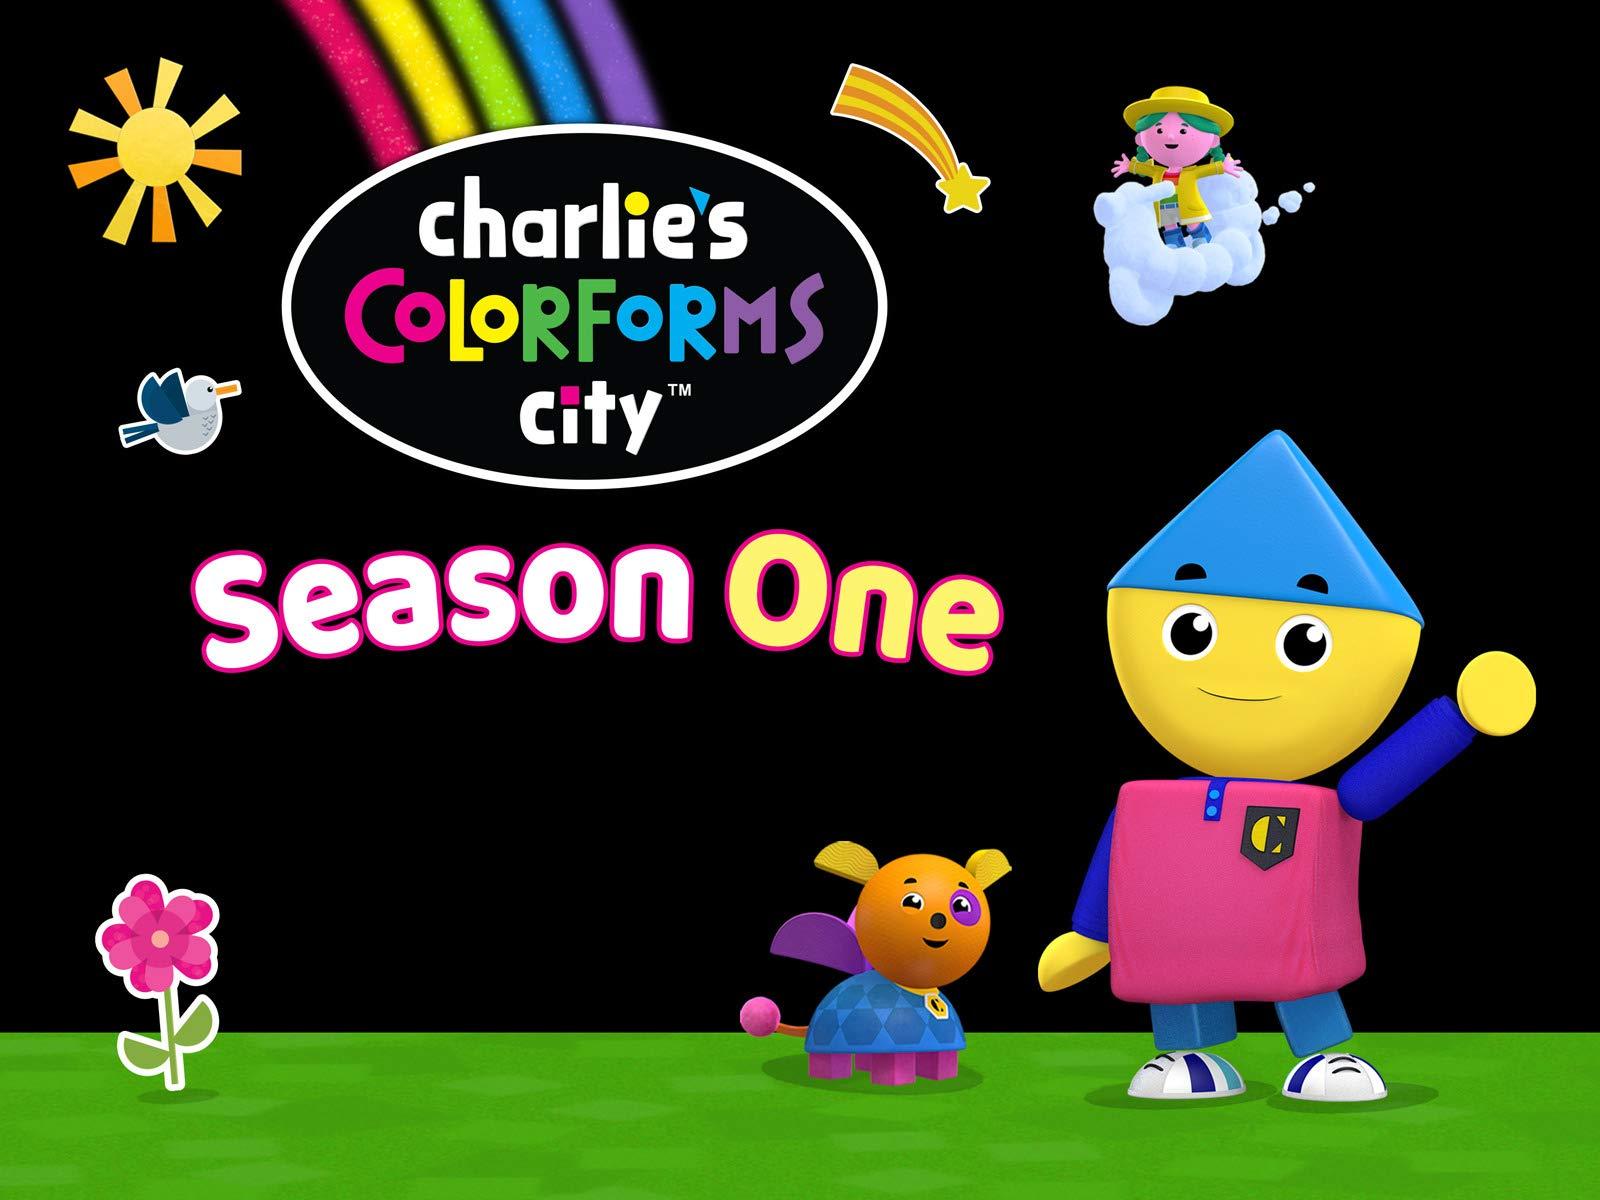 1. Charlie's Colorforms City  